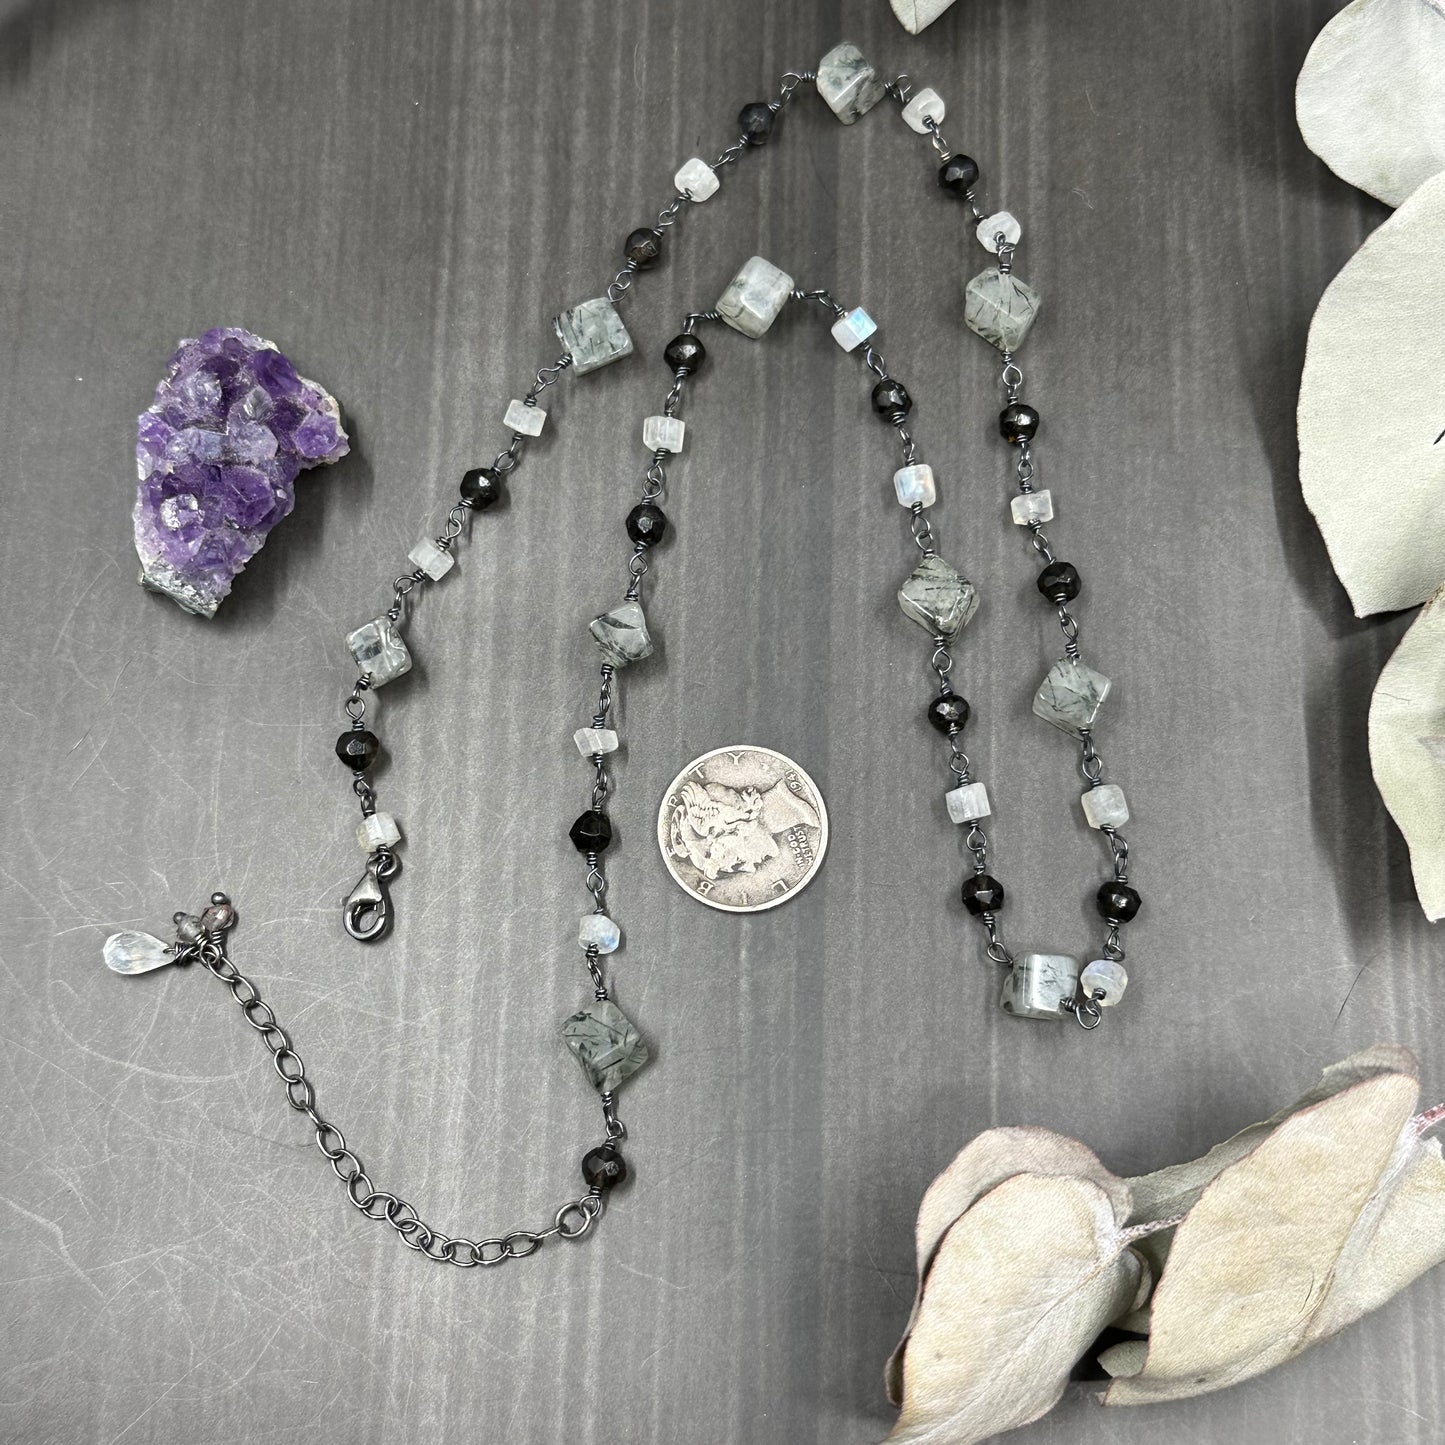 Tourmalinated quartz, smoky quartz, and rainbow moonstone sterling silver necklace